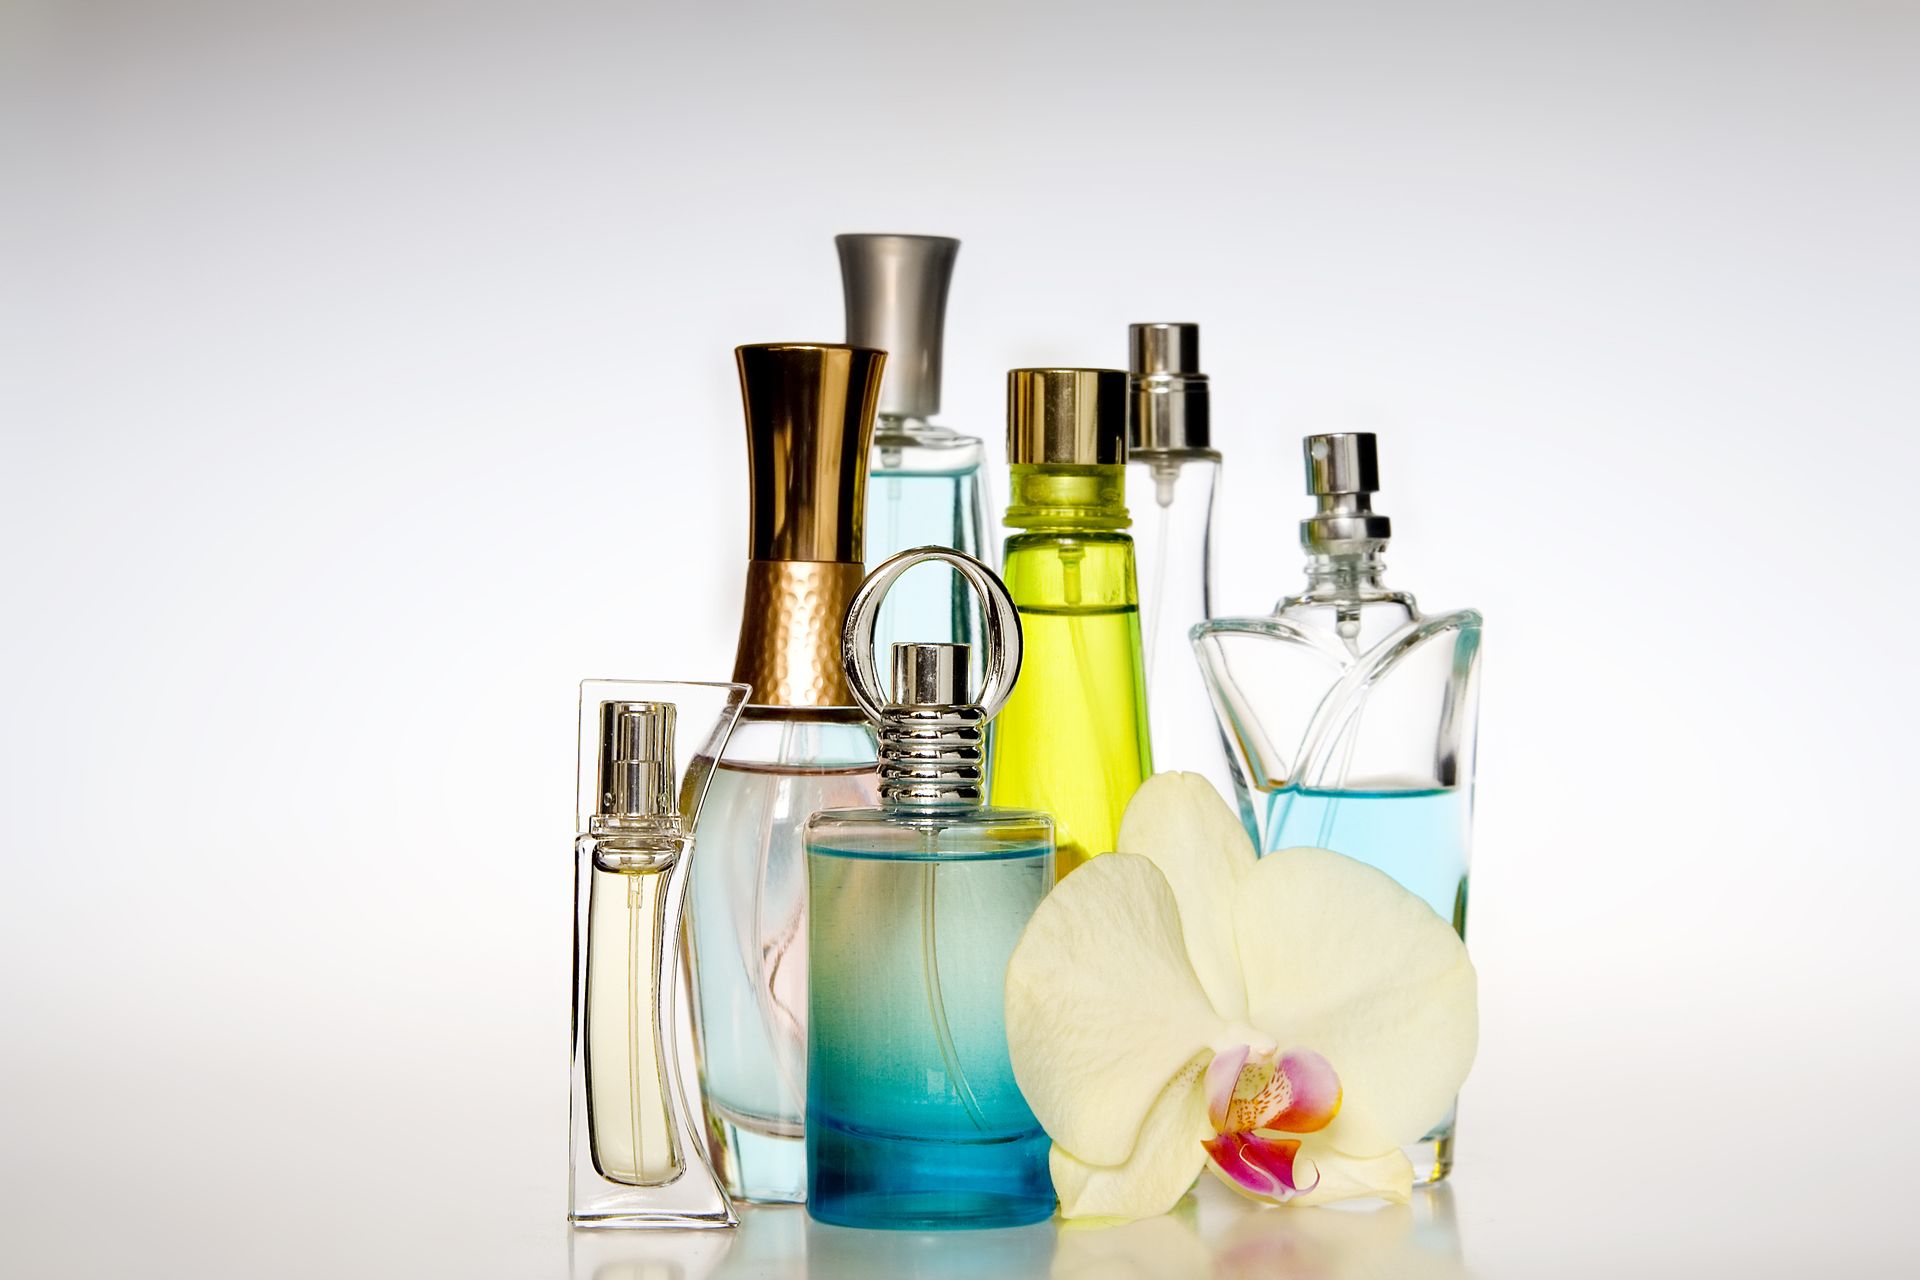 Materias Primas y Perfumes / Raw Materials and Perfumes